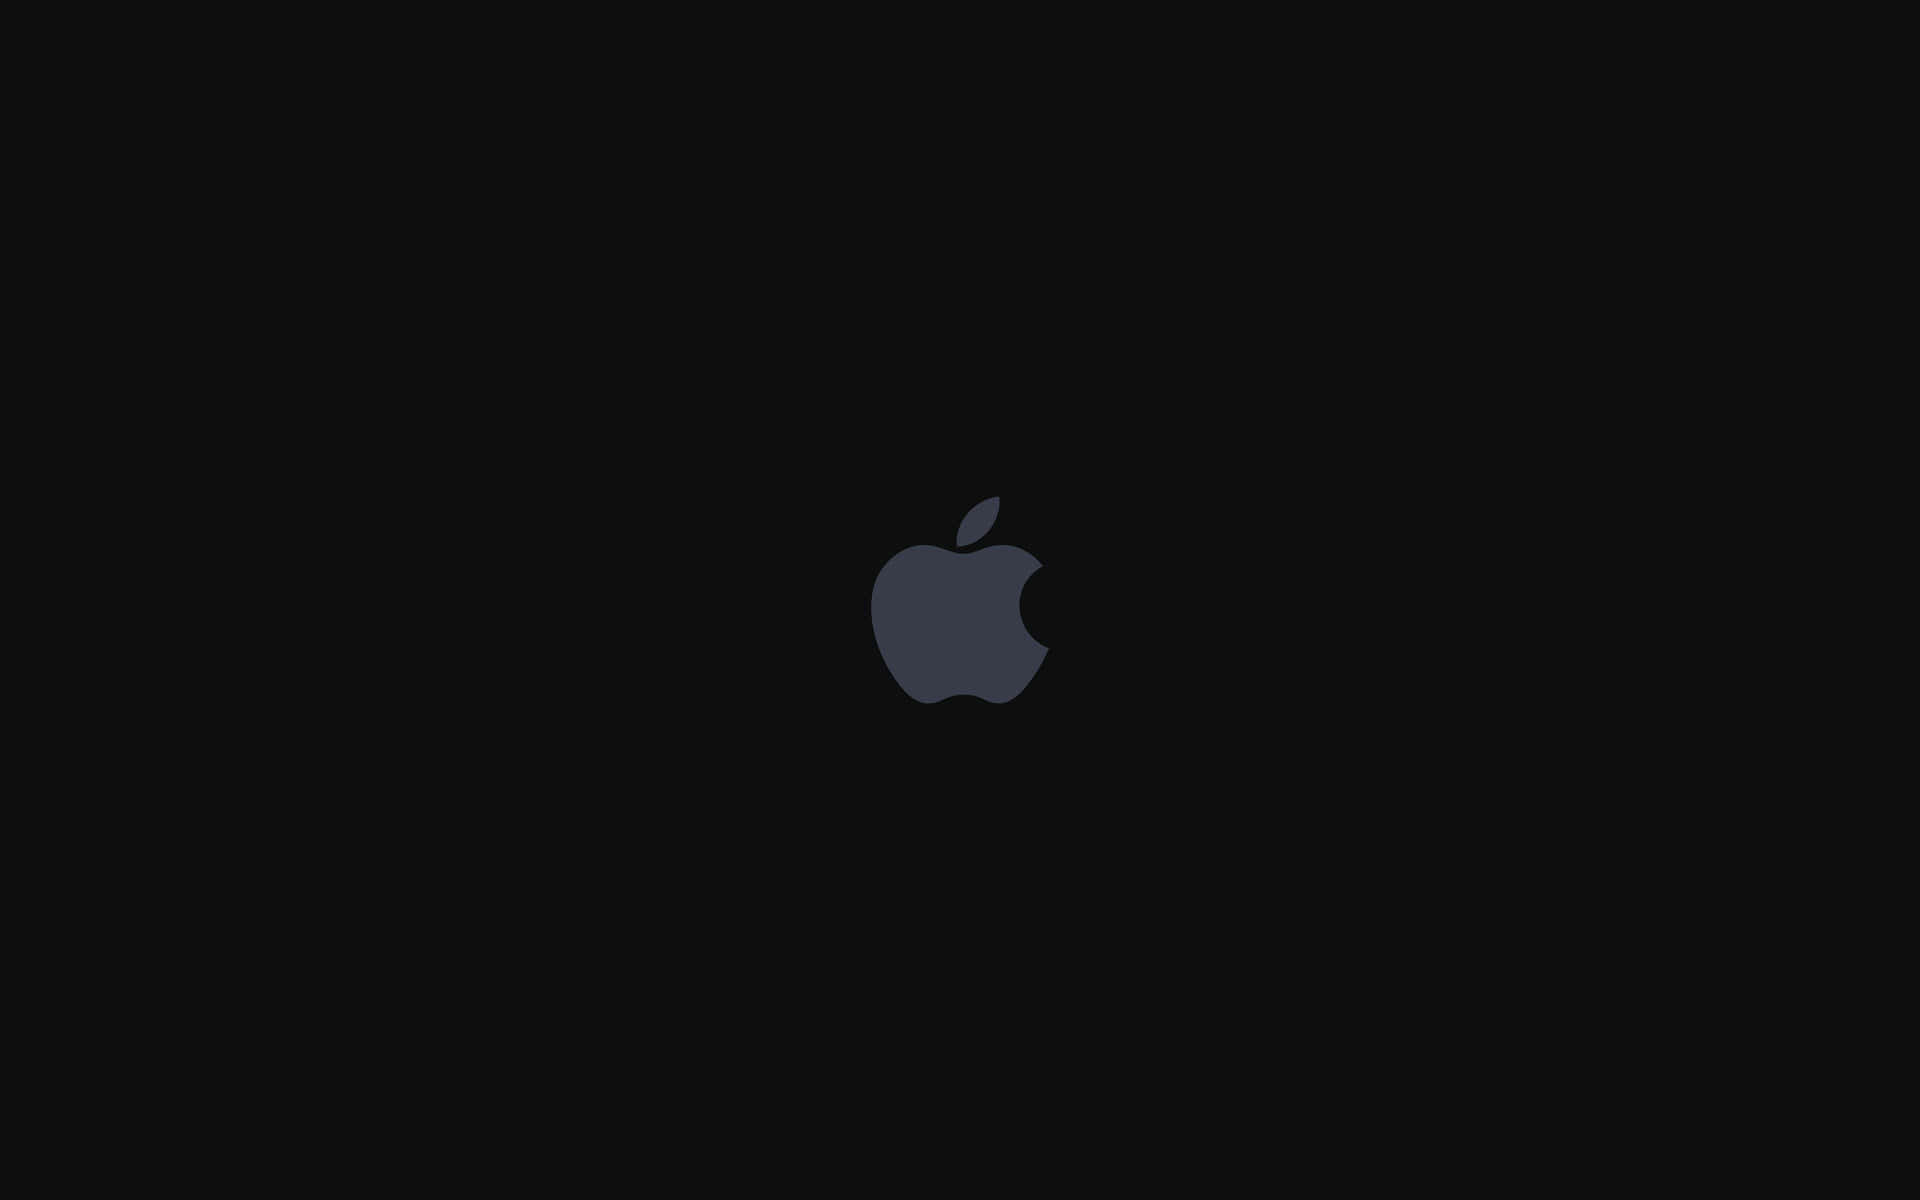 Download A Minimalistic Classic - The Black Apple Logo Wallpaper |  